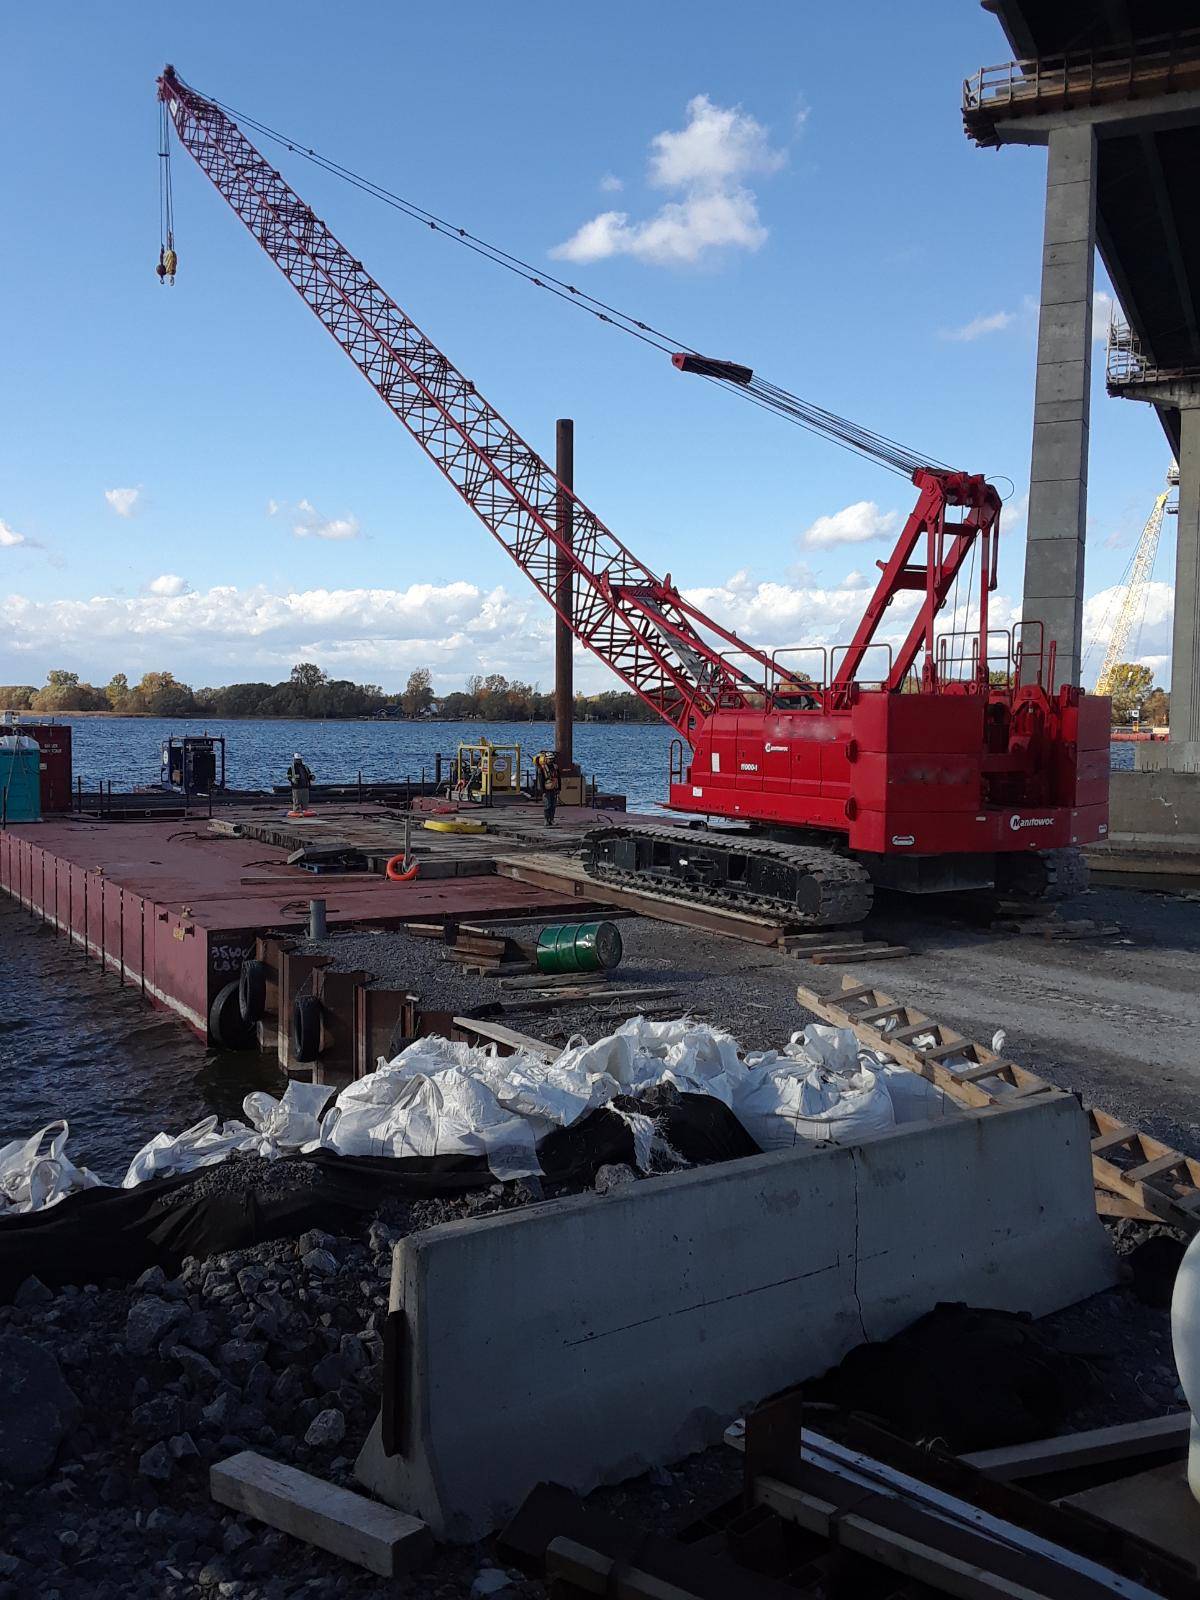 Loading the 110 ton crane onto the barge